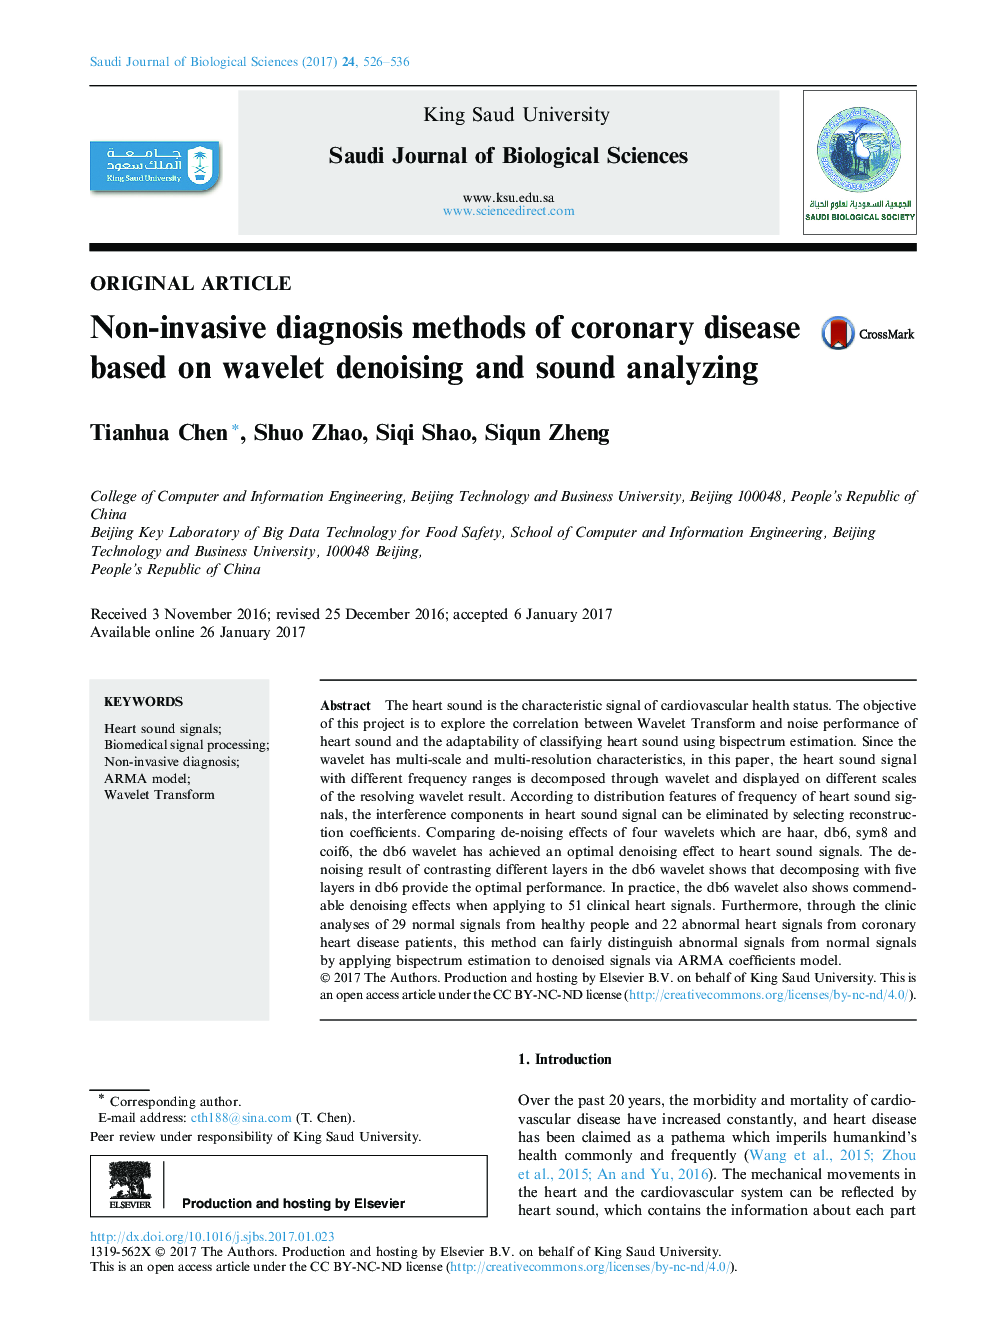 Original articleNon-invasive diagnosis methods of coronary disease based on wavelet denoising and sound analyzing